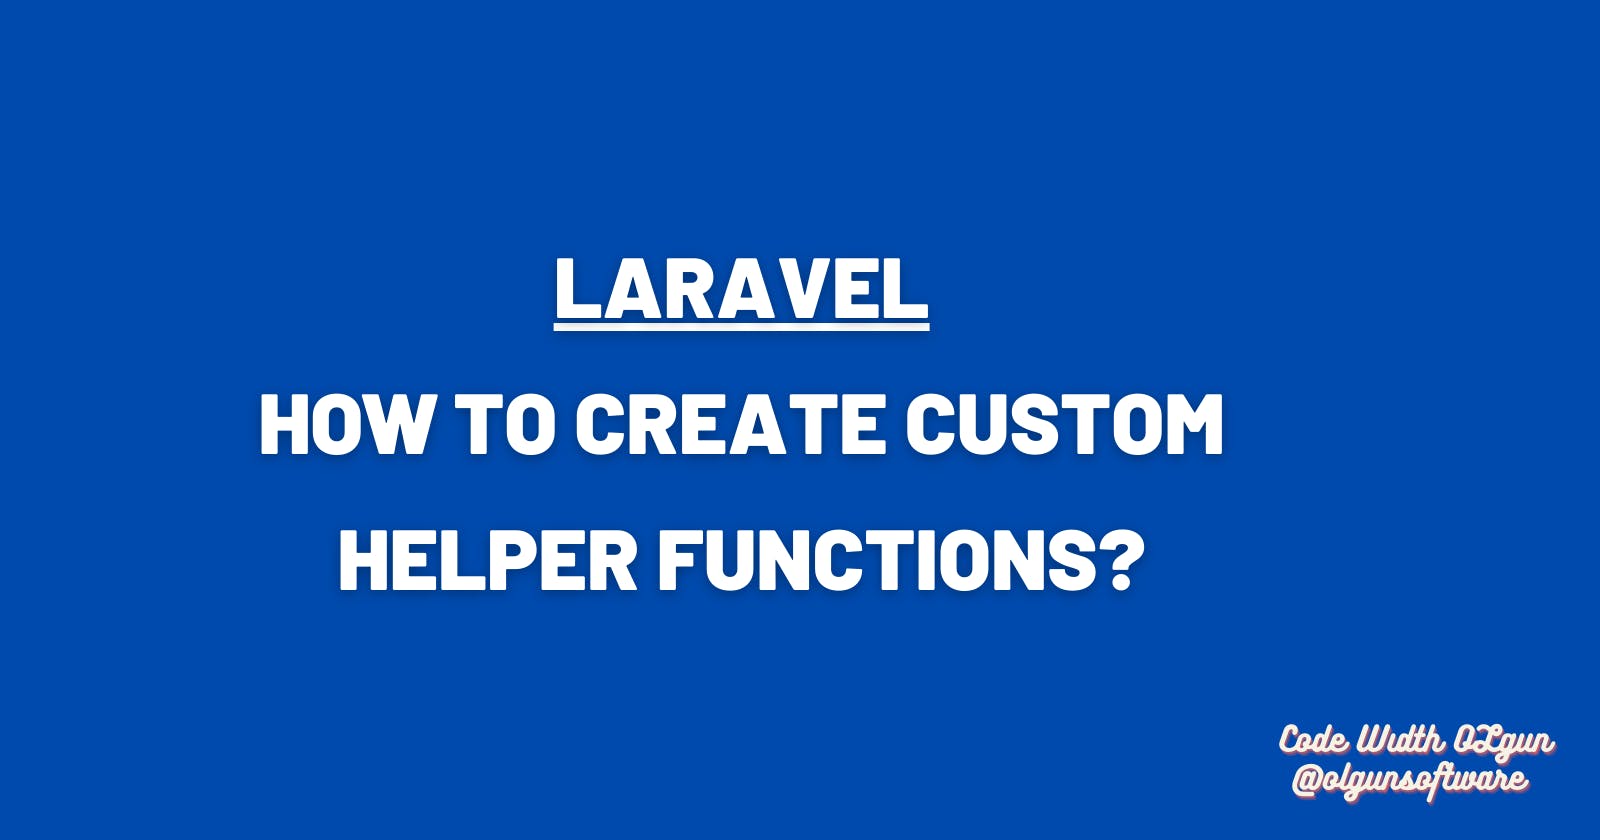 How to create custom helpers in Laravel?